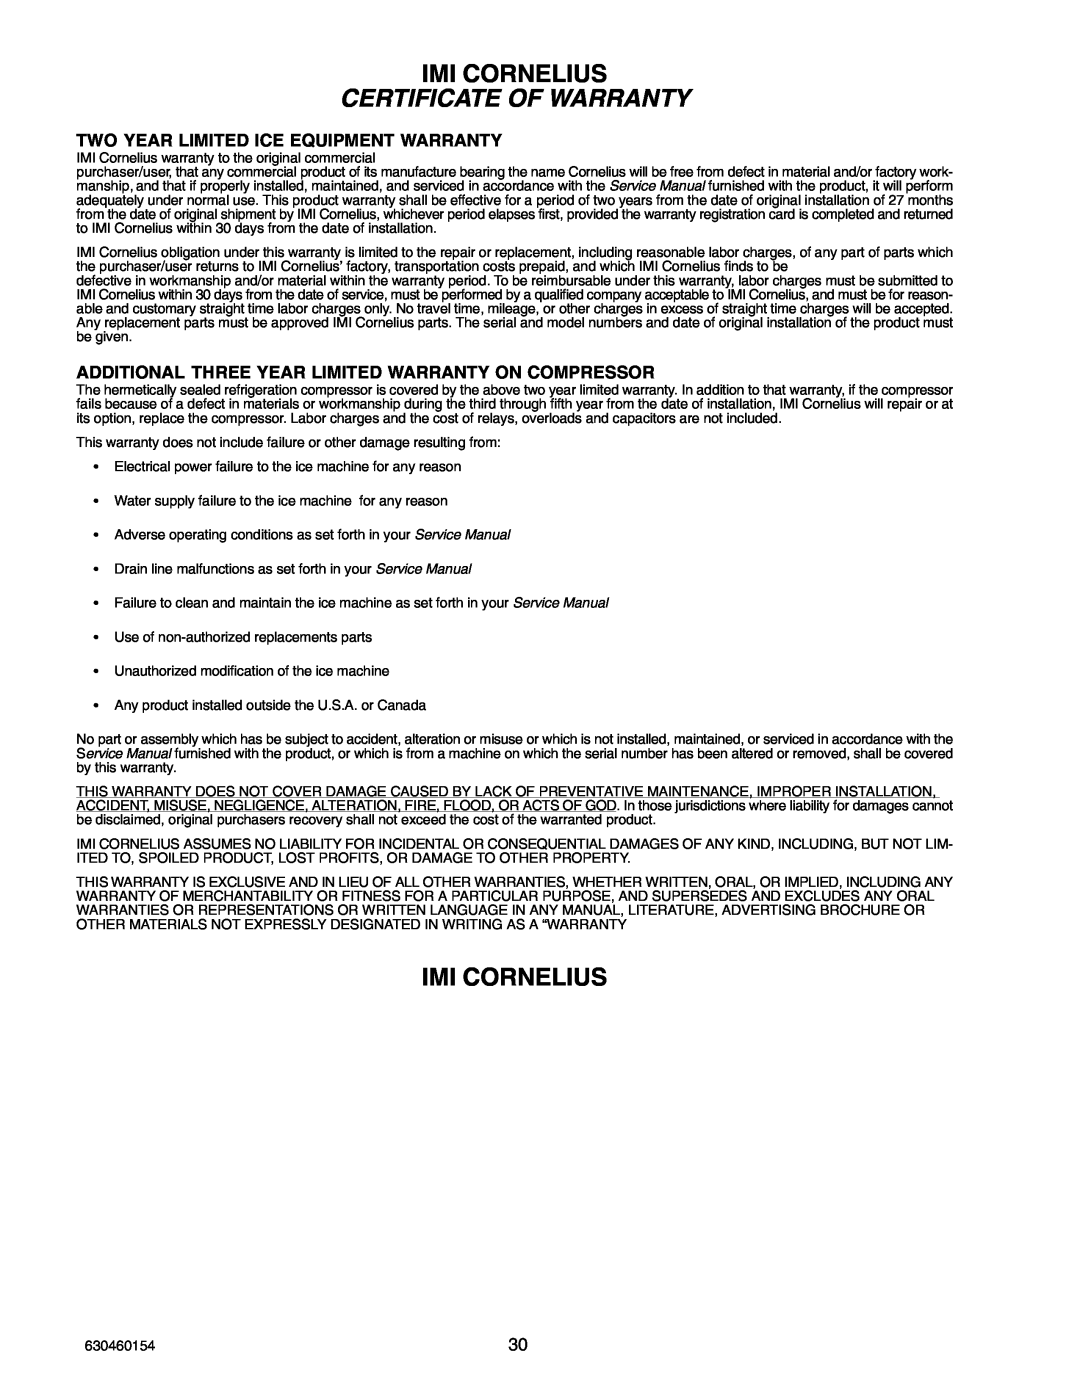 Cornelius UCR 700 Series service manual Imi Cornelius, Two Year Limited Ice Equipment Warranty, Certificate Of Warranty 